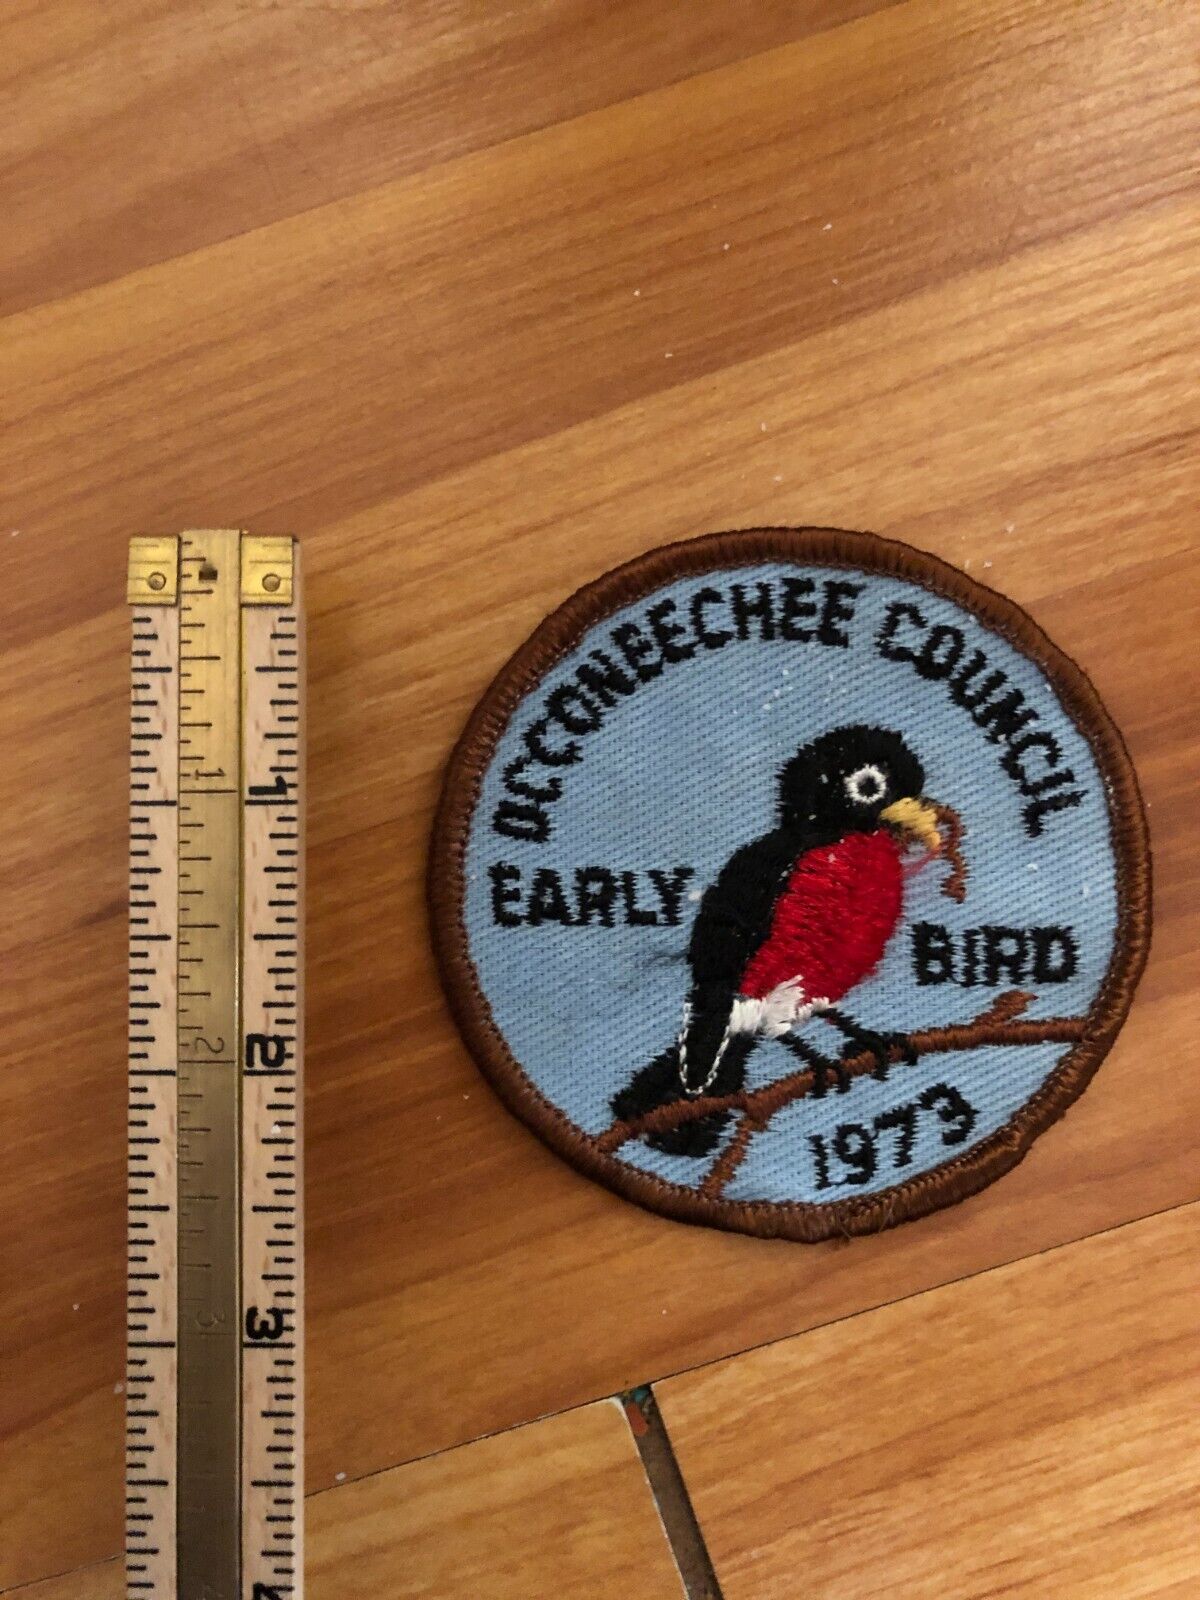 1973 Occoneechee Council Early Bird Boy Scout Patch